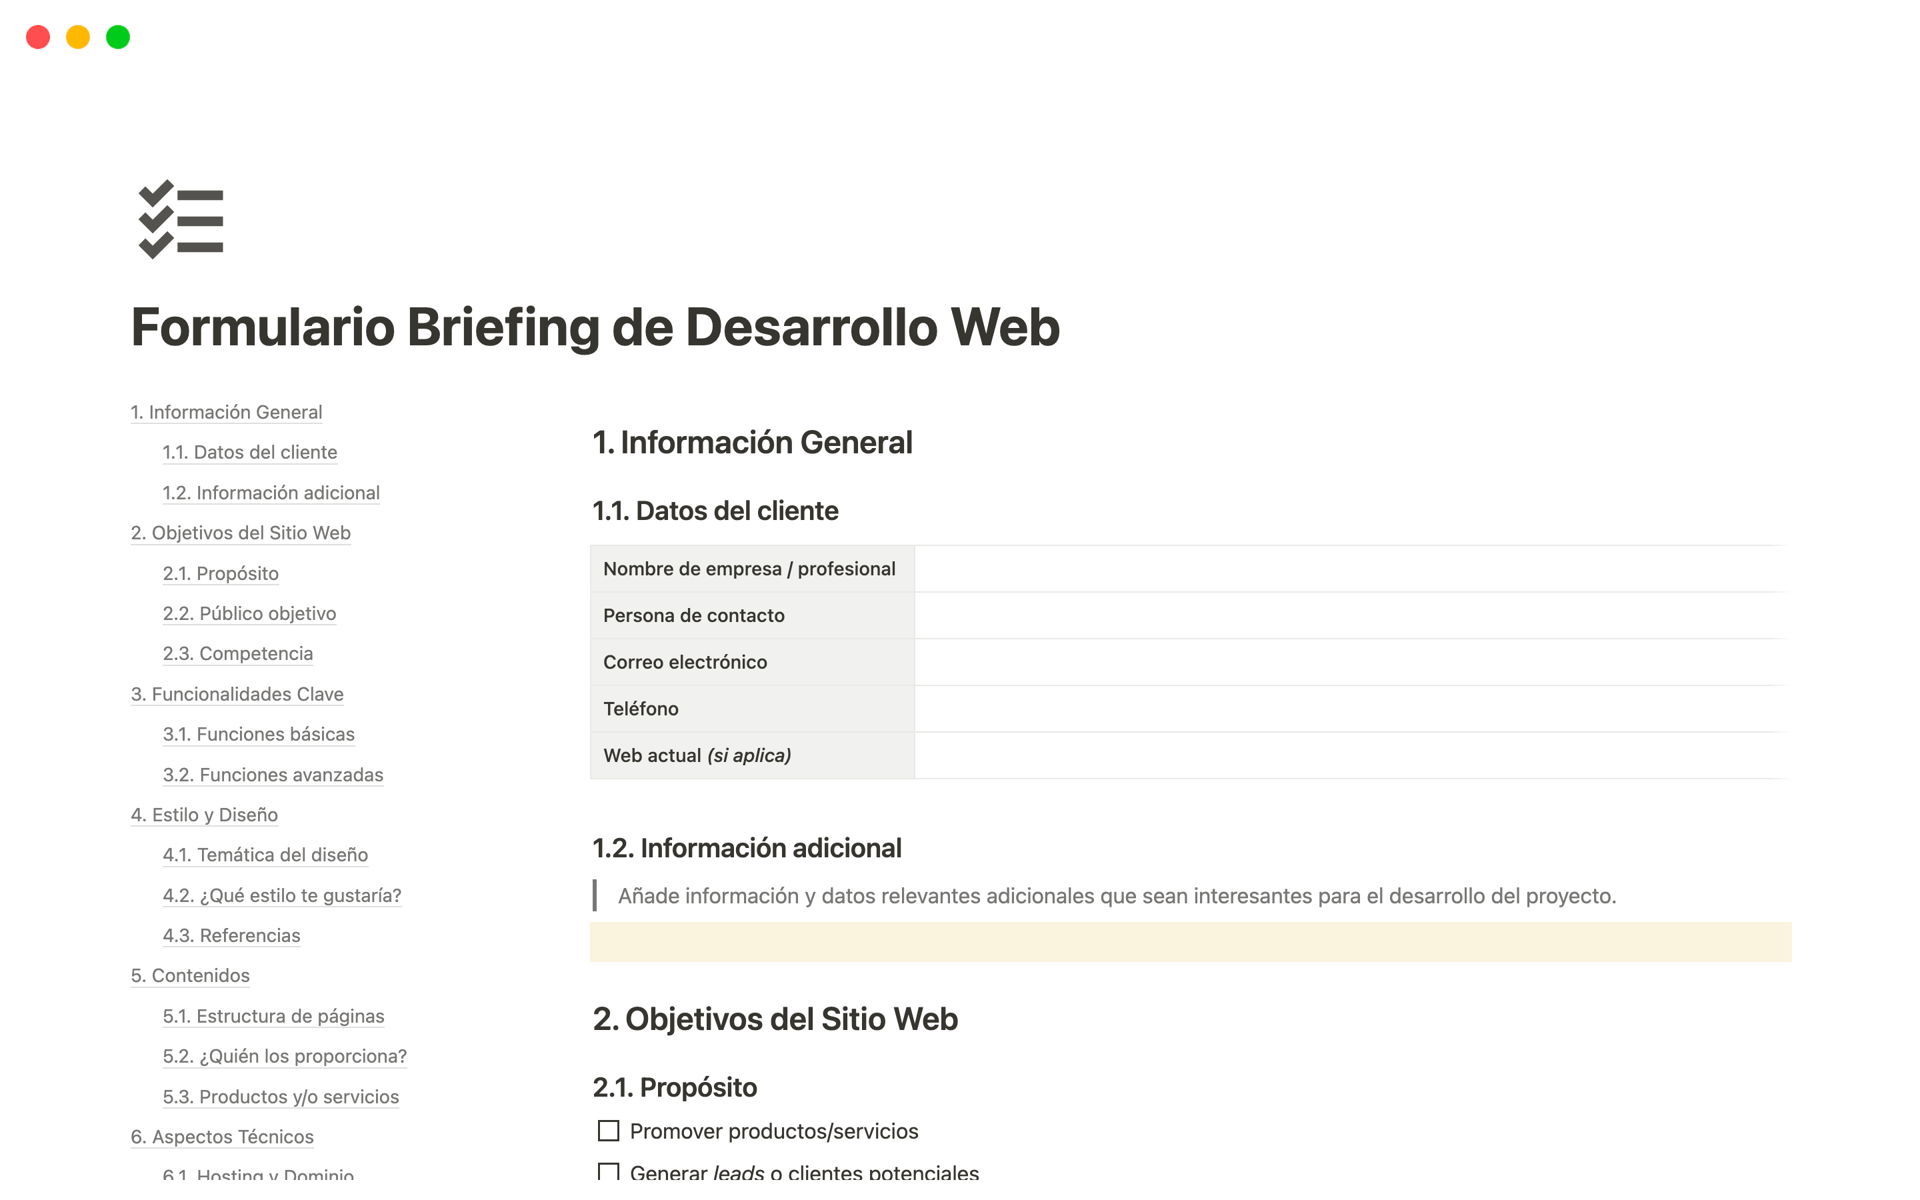 A template preview for Formulario Briefing de Desarrollo Web